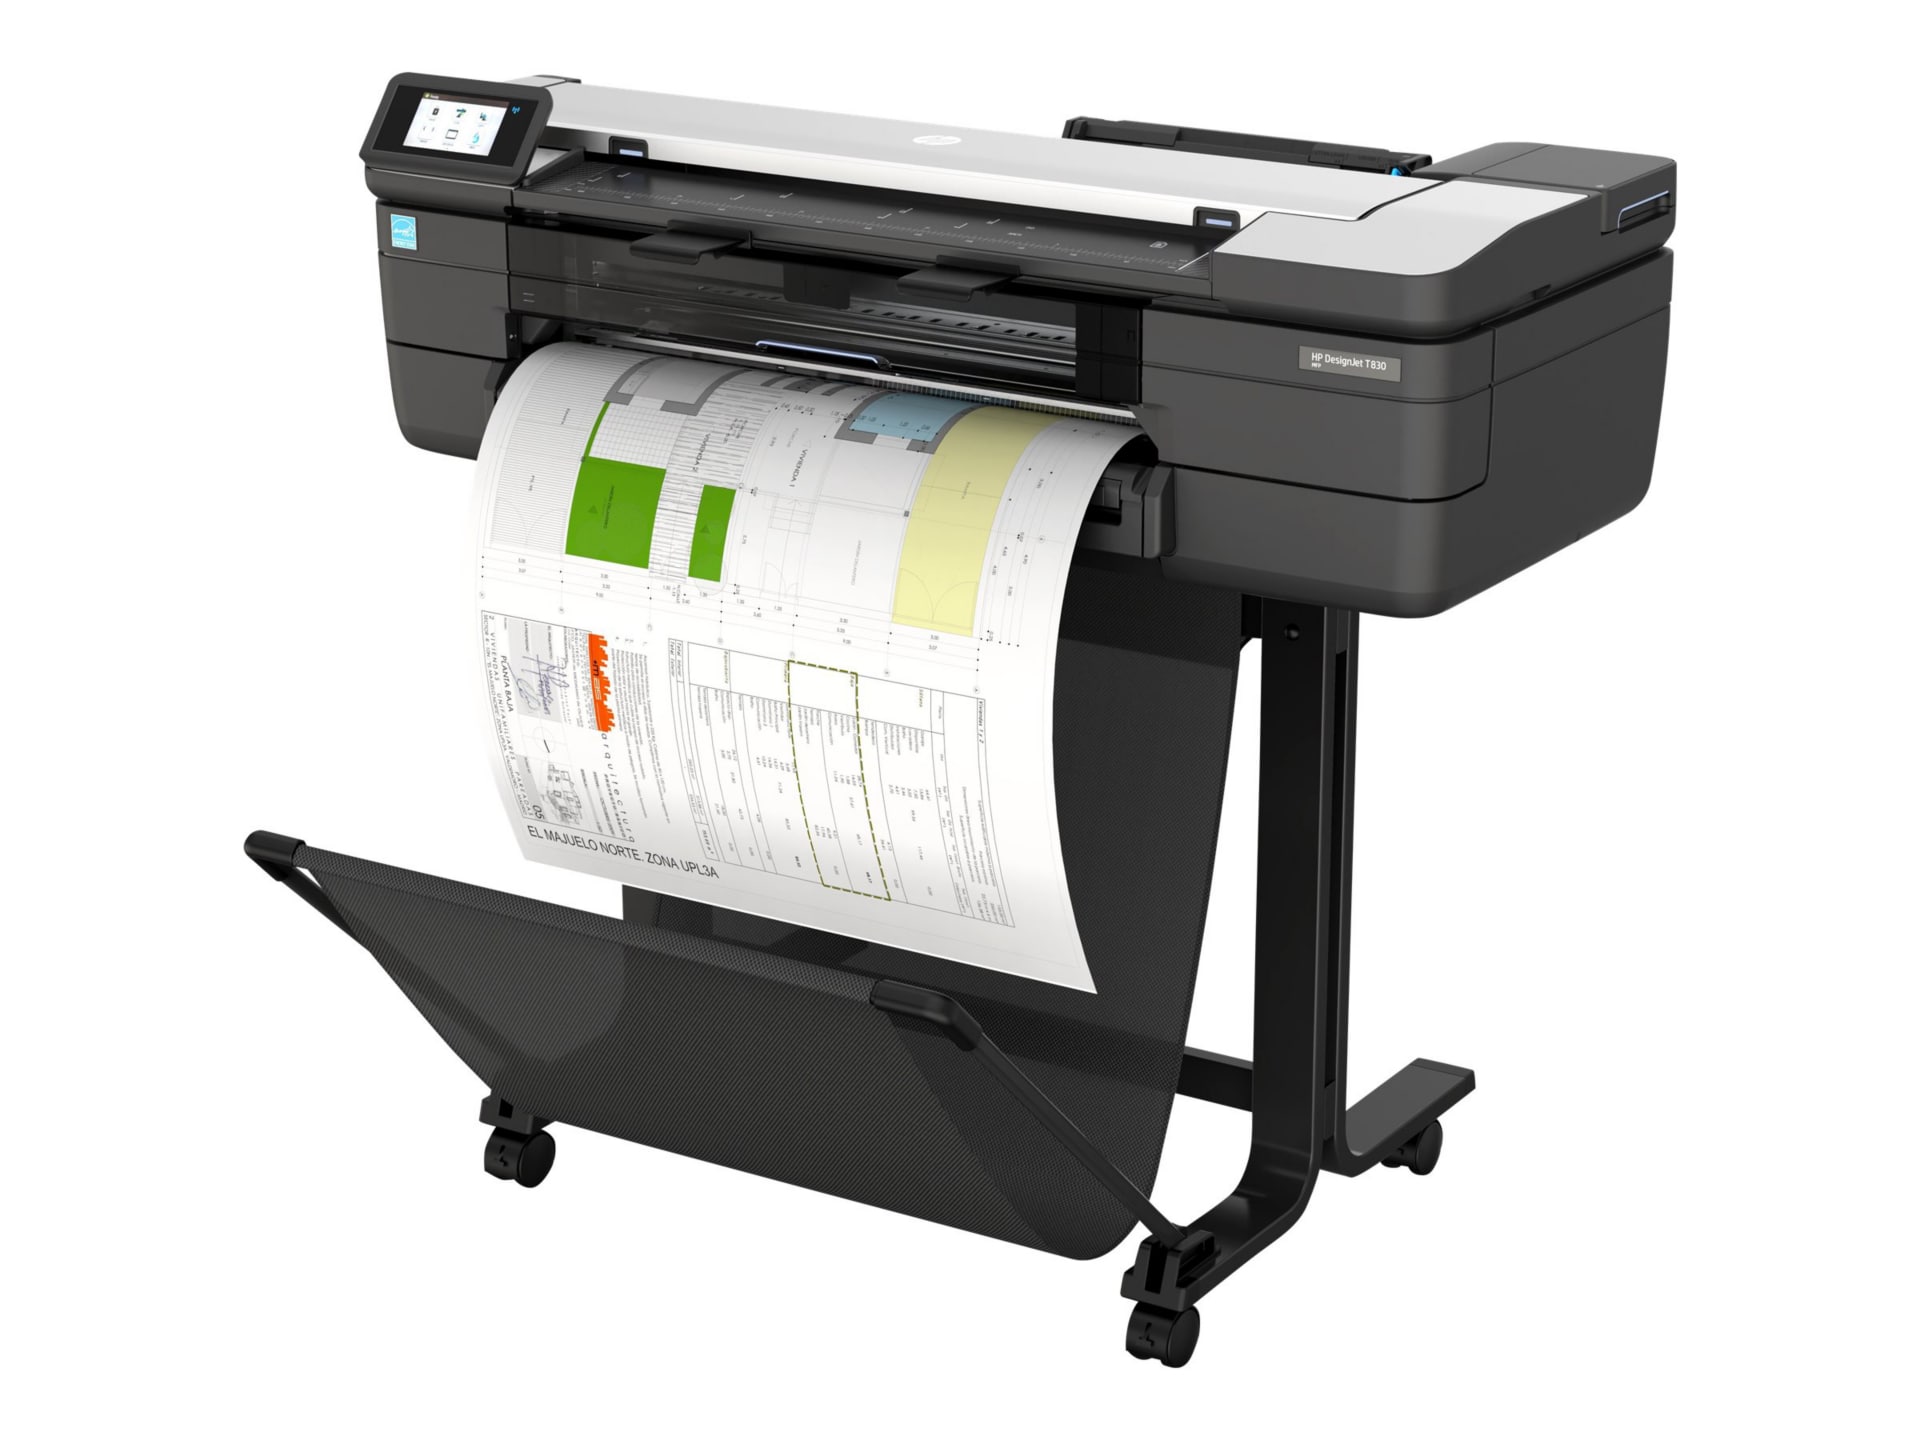 HP Designjet T830 Inkjet Large Format Printer - Includes Printer, Copier, S